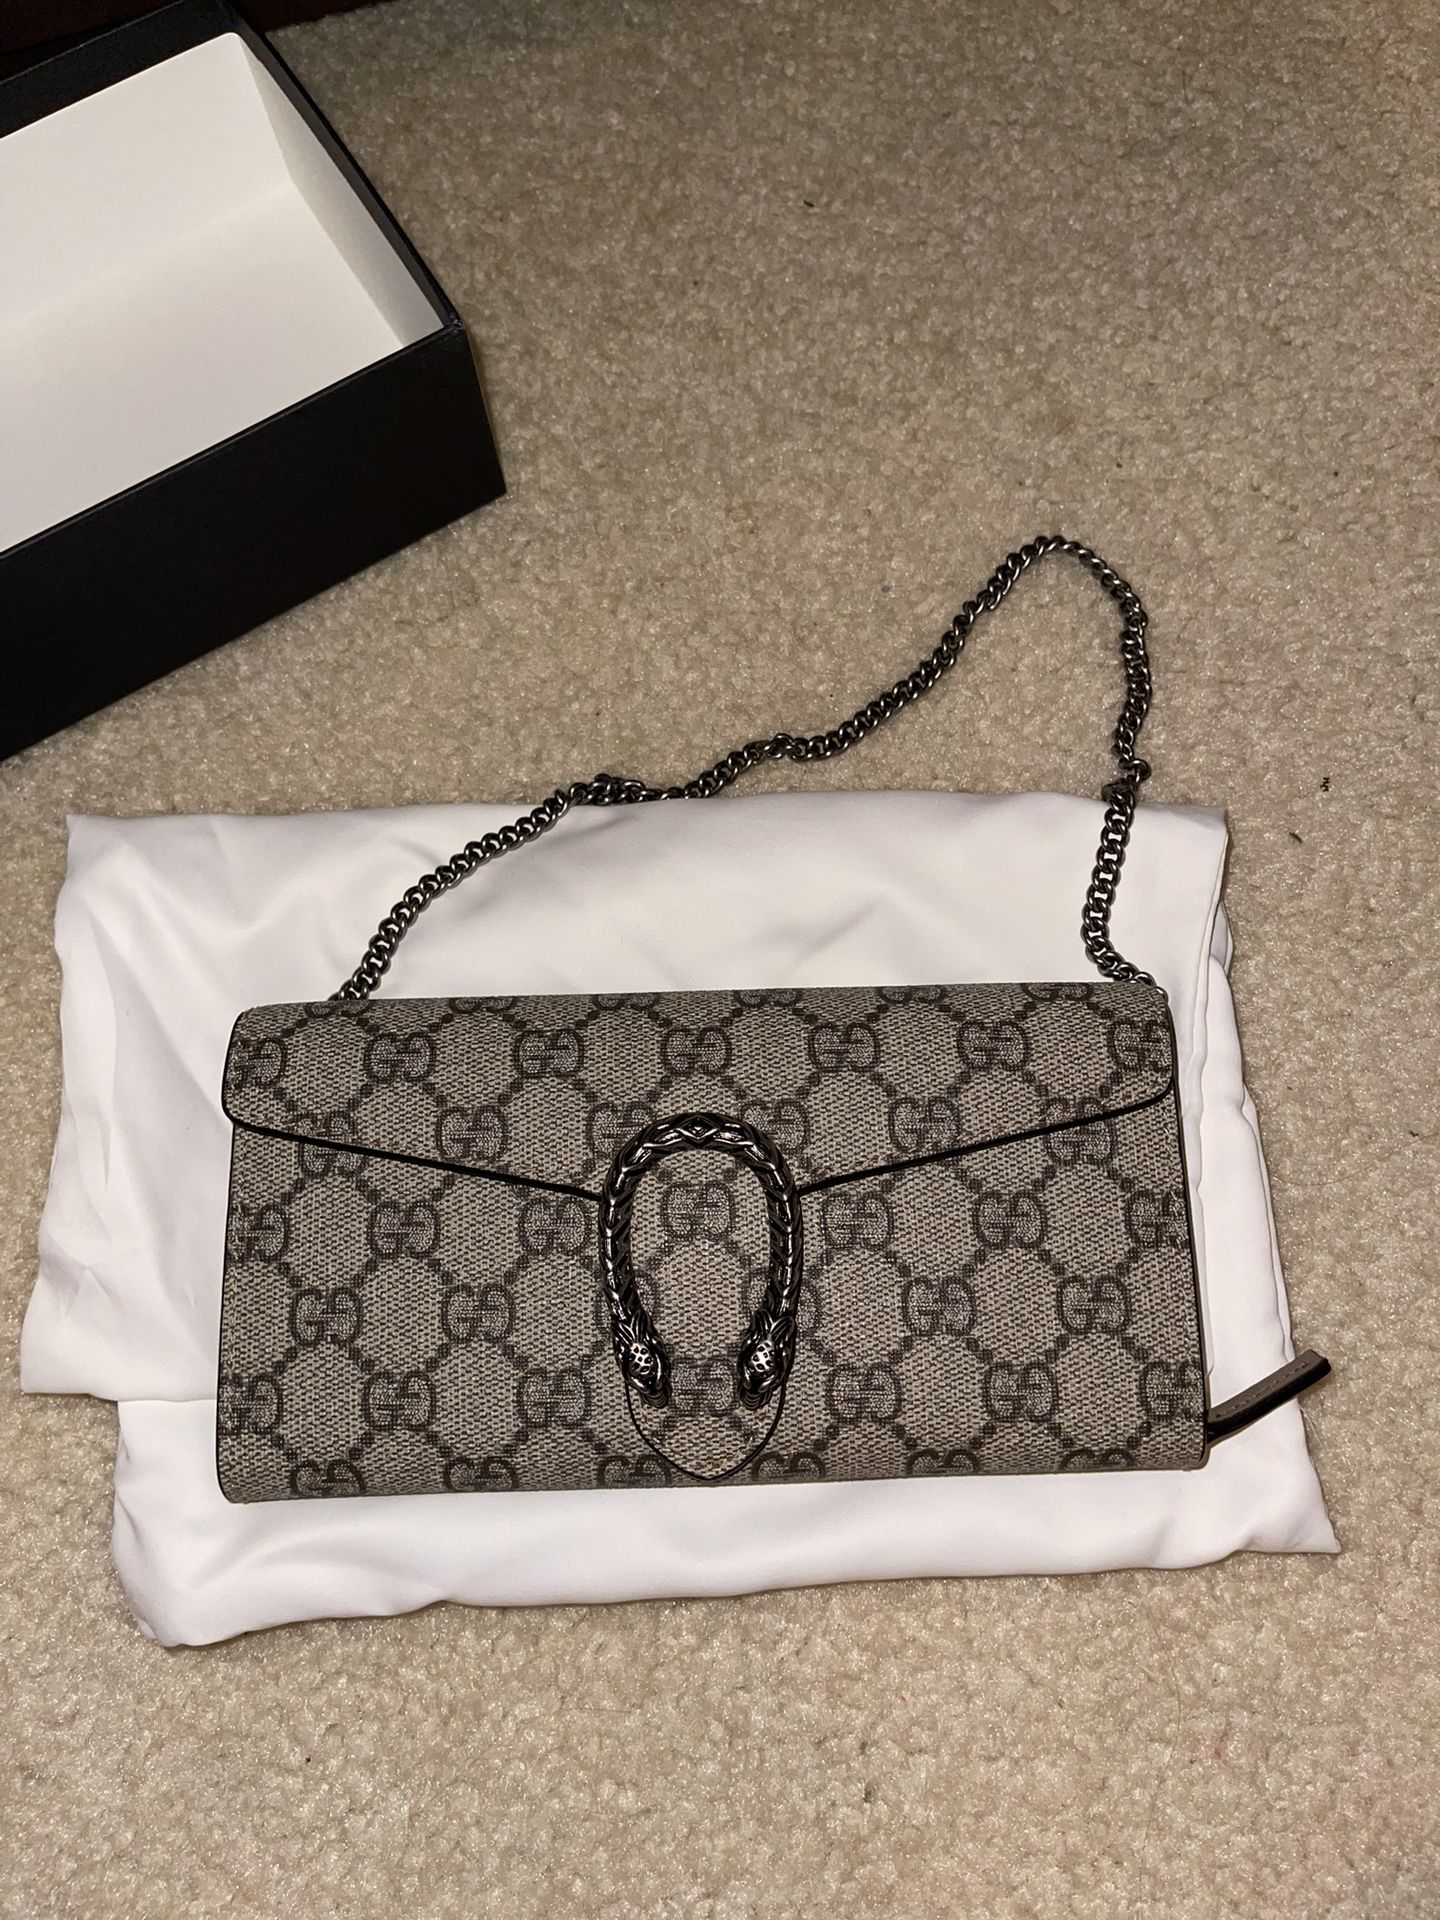 Gucci Dionysus GG Supreme Mini Bag - Farfetch